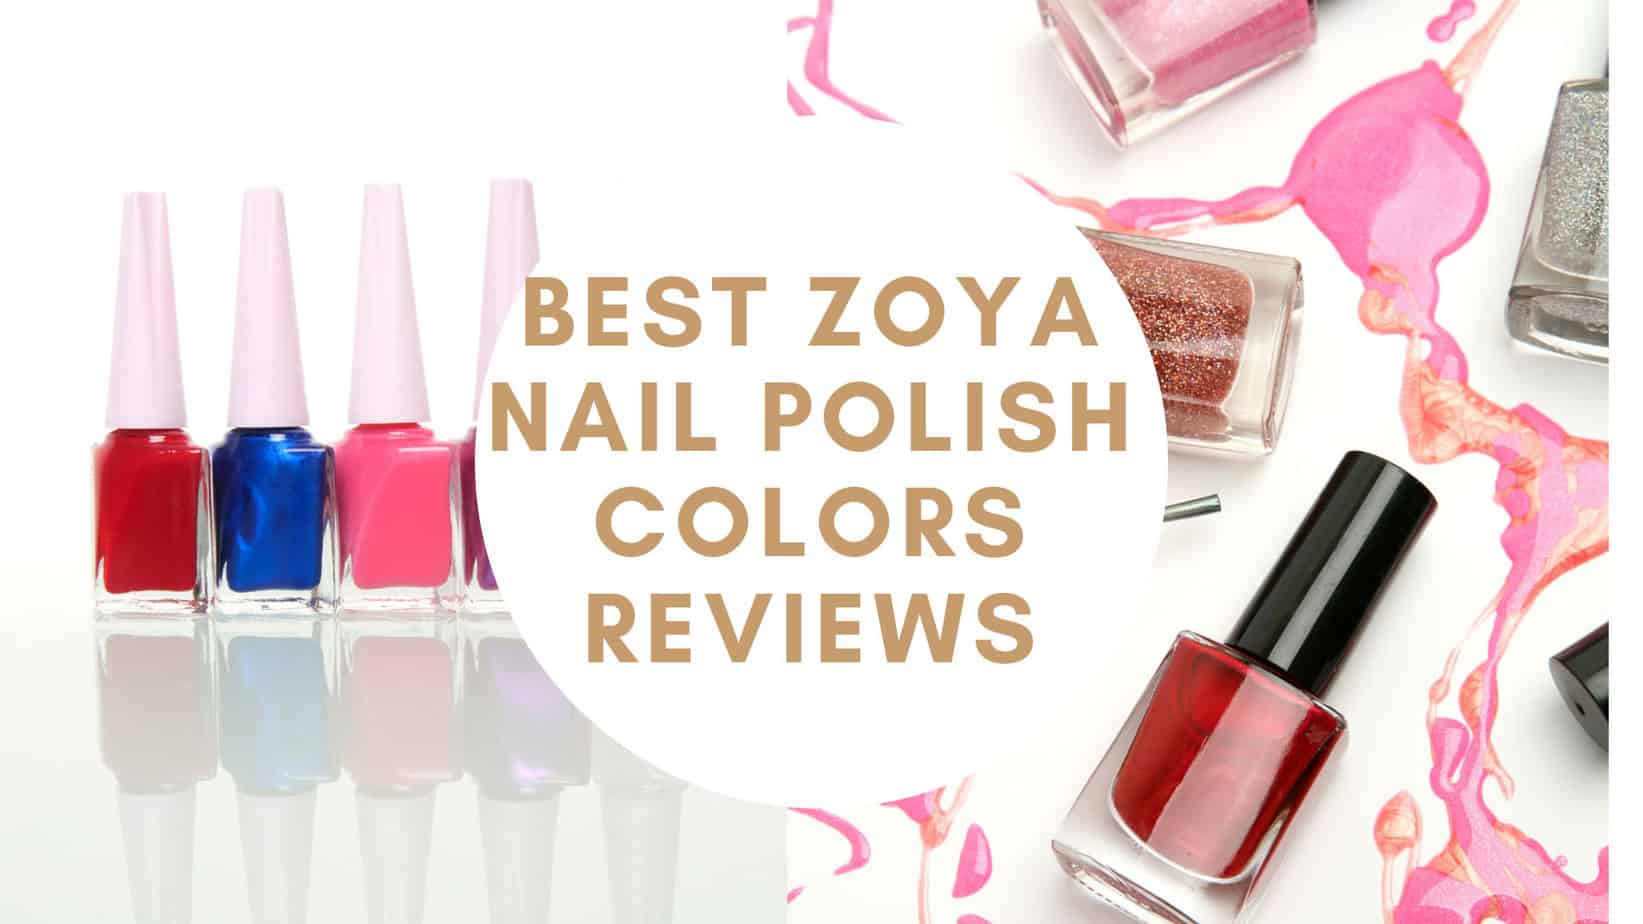 5. Zoya Nail Polish Color Samples - wide 4